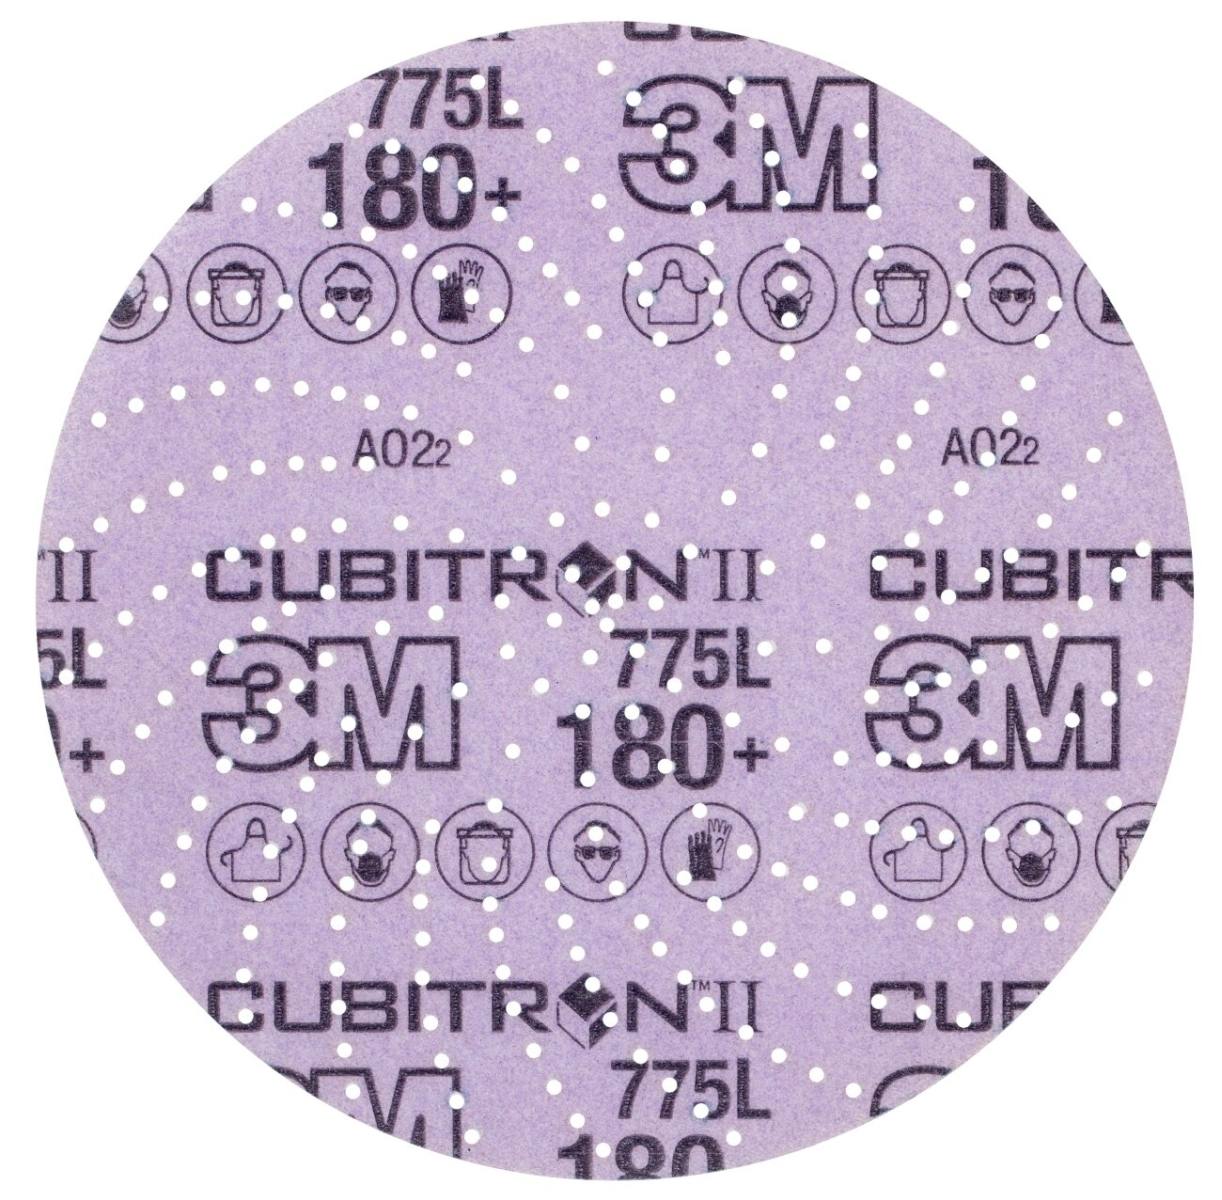 3M Cubitron II Hookit film disc 775L, 150 mm, 180+, multihole #739401